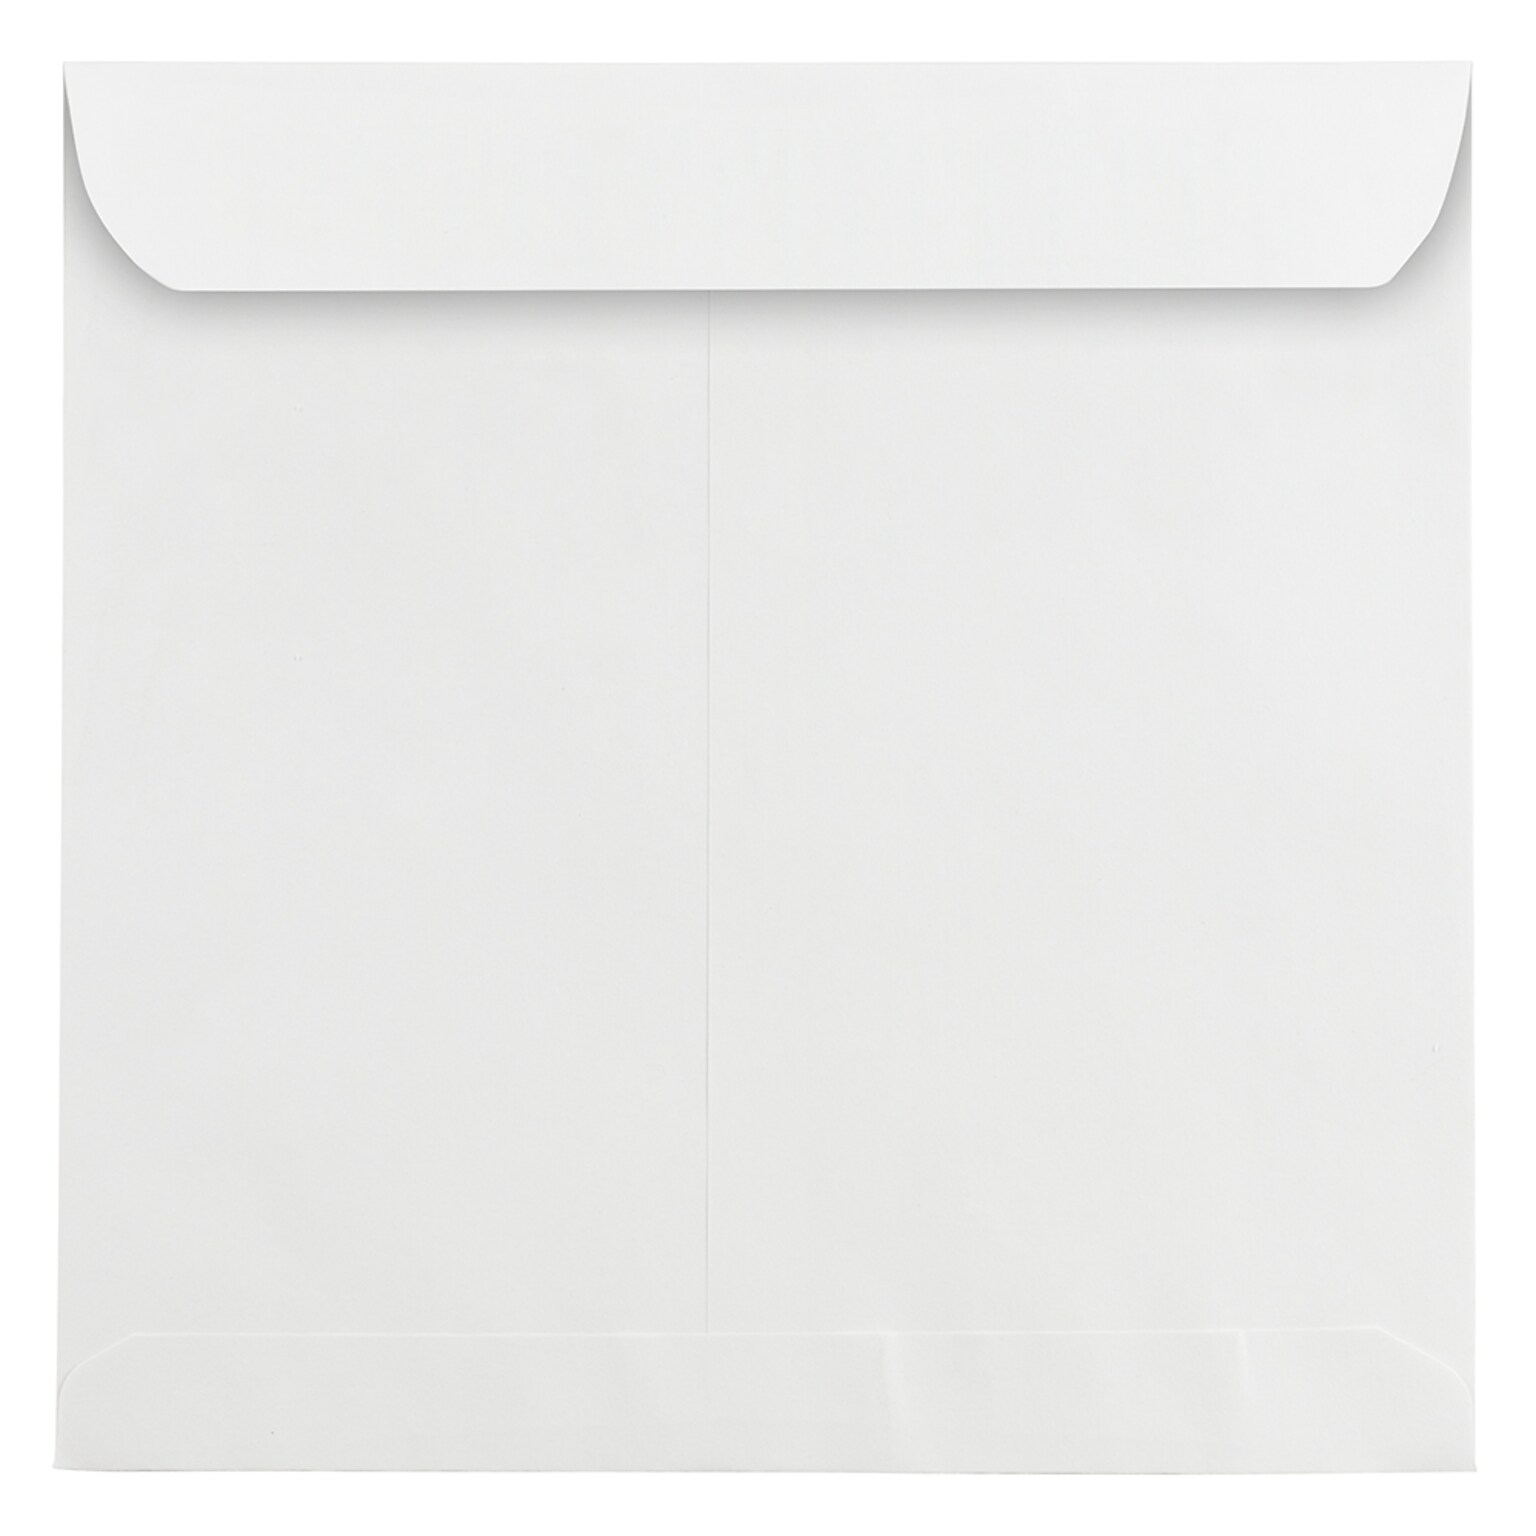 JAM Paper 11.5 x 11.5 Large Square Invitation Envelopes, White, 50/Pack (3992321I)